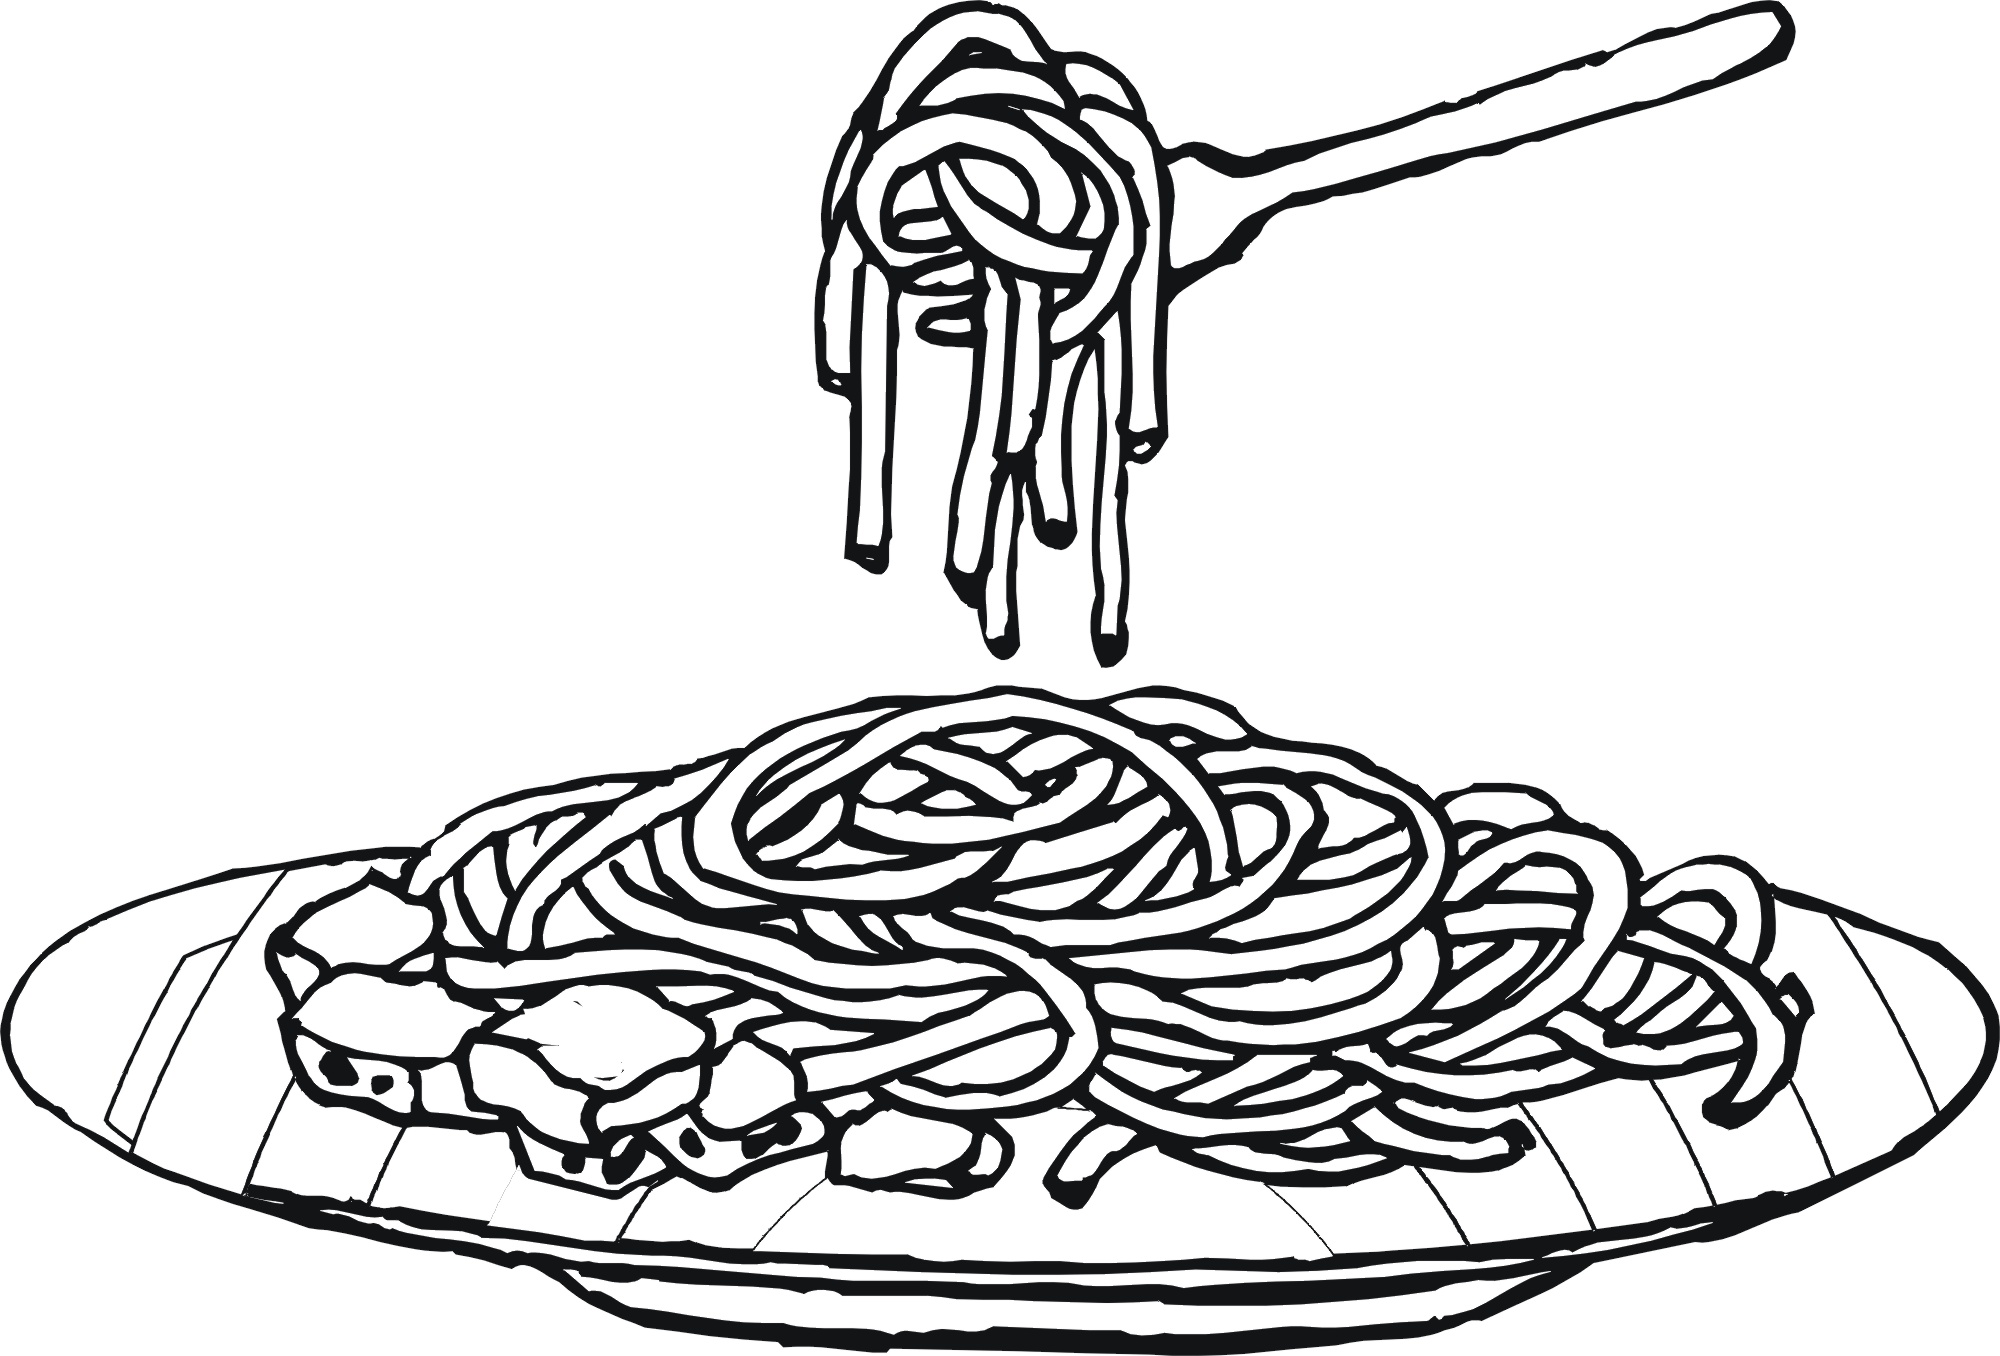 Spaghetti cartoons free.